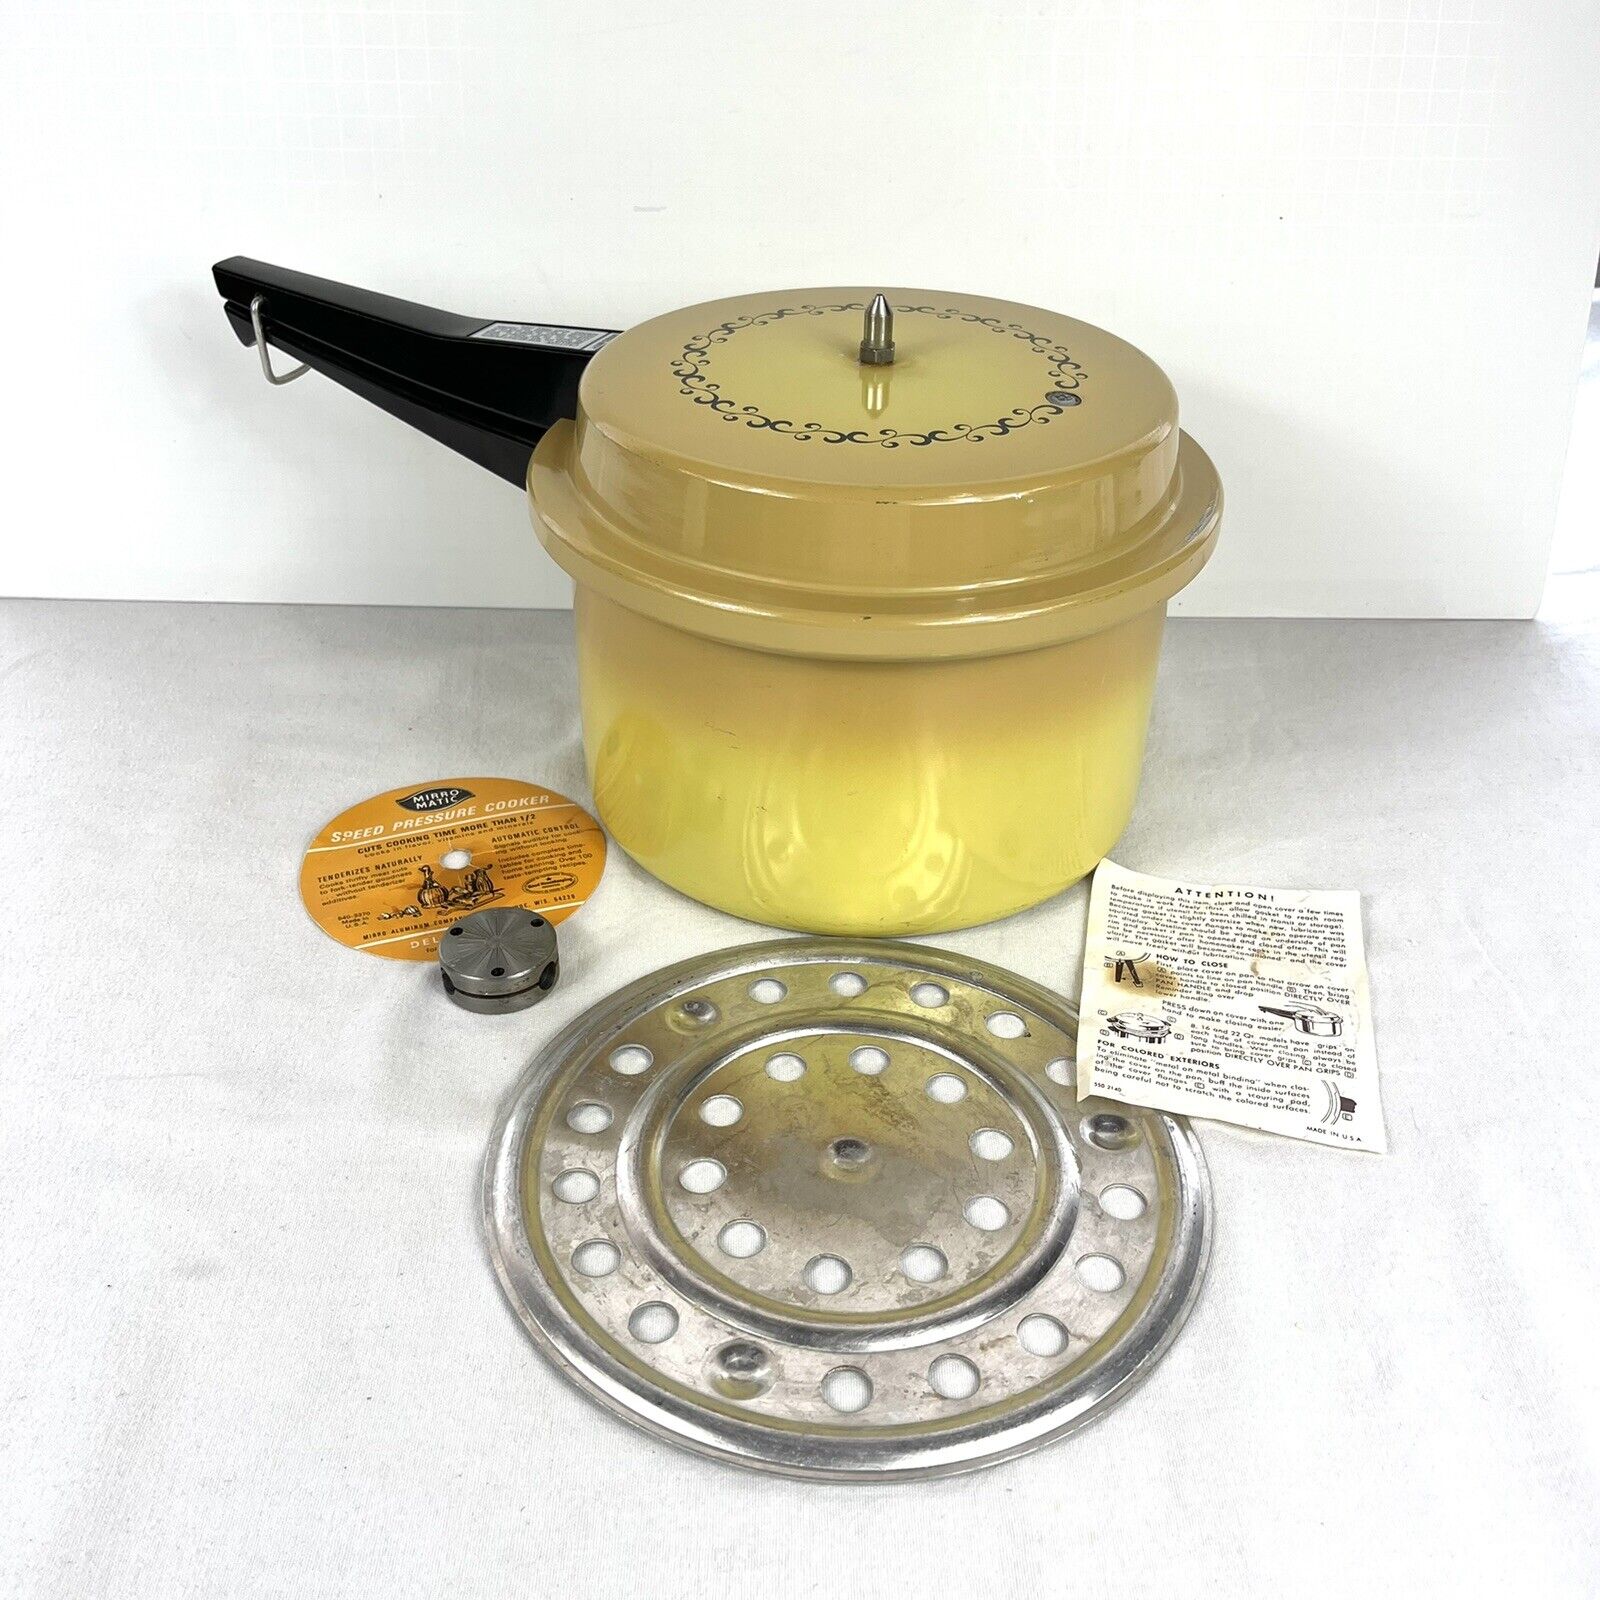 Mirro Matic Pressure Cooker 4 Qt Cooking Pot Vintage Aluminum USA Made Yellow